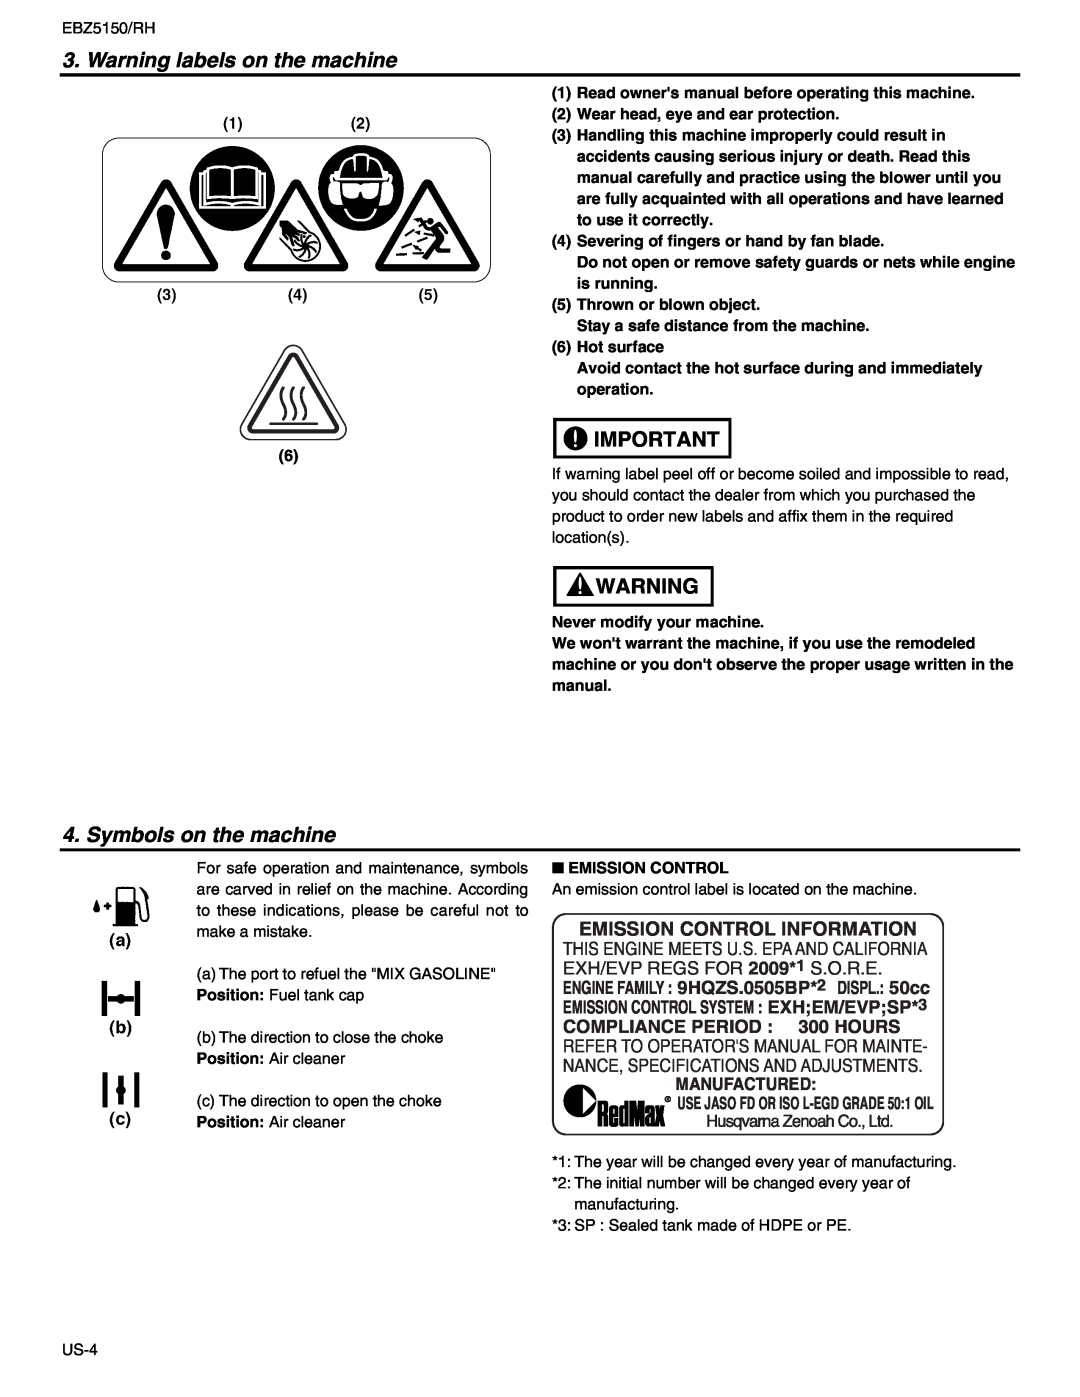 RedMax EBZ5150RH manual Warning labels on the machine, Symbols on the machine, Emission Control Information 